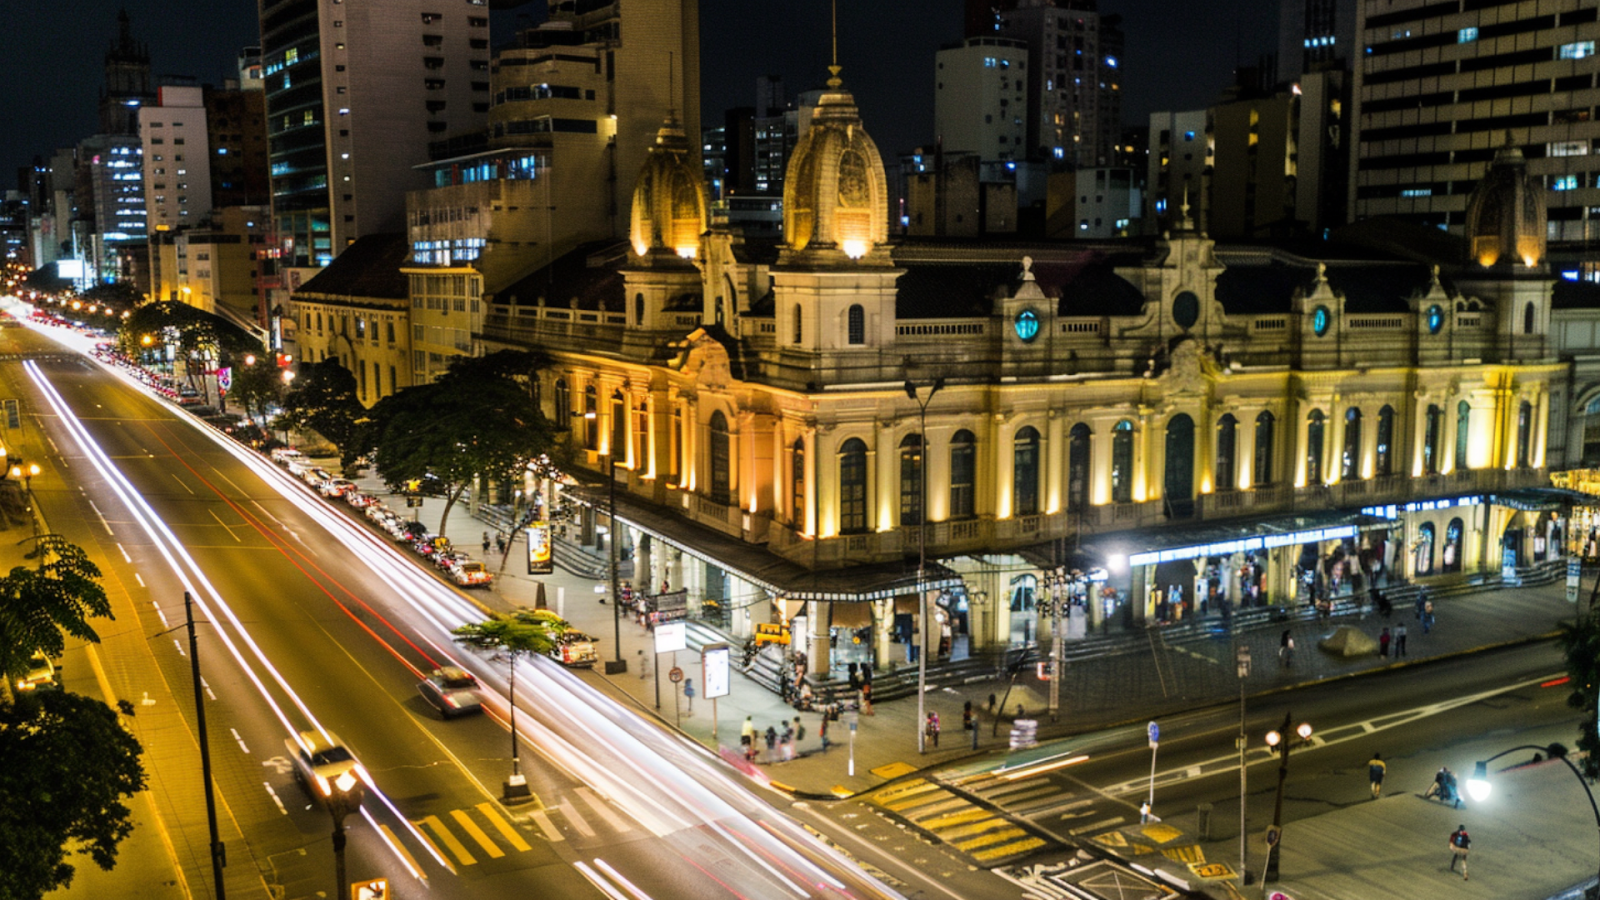 The Mercado Municipal in Sao Paulo at night